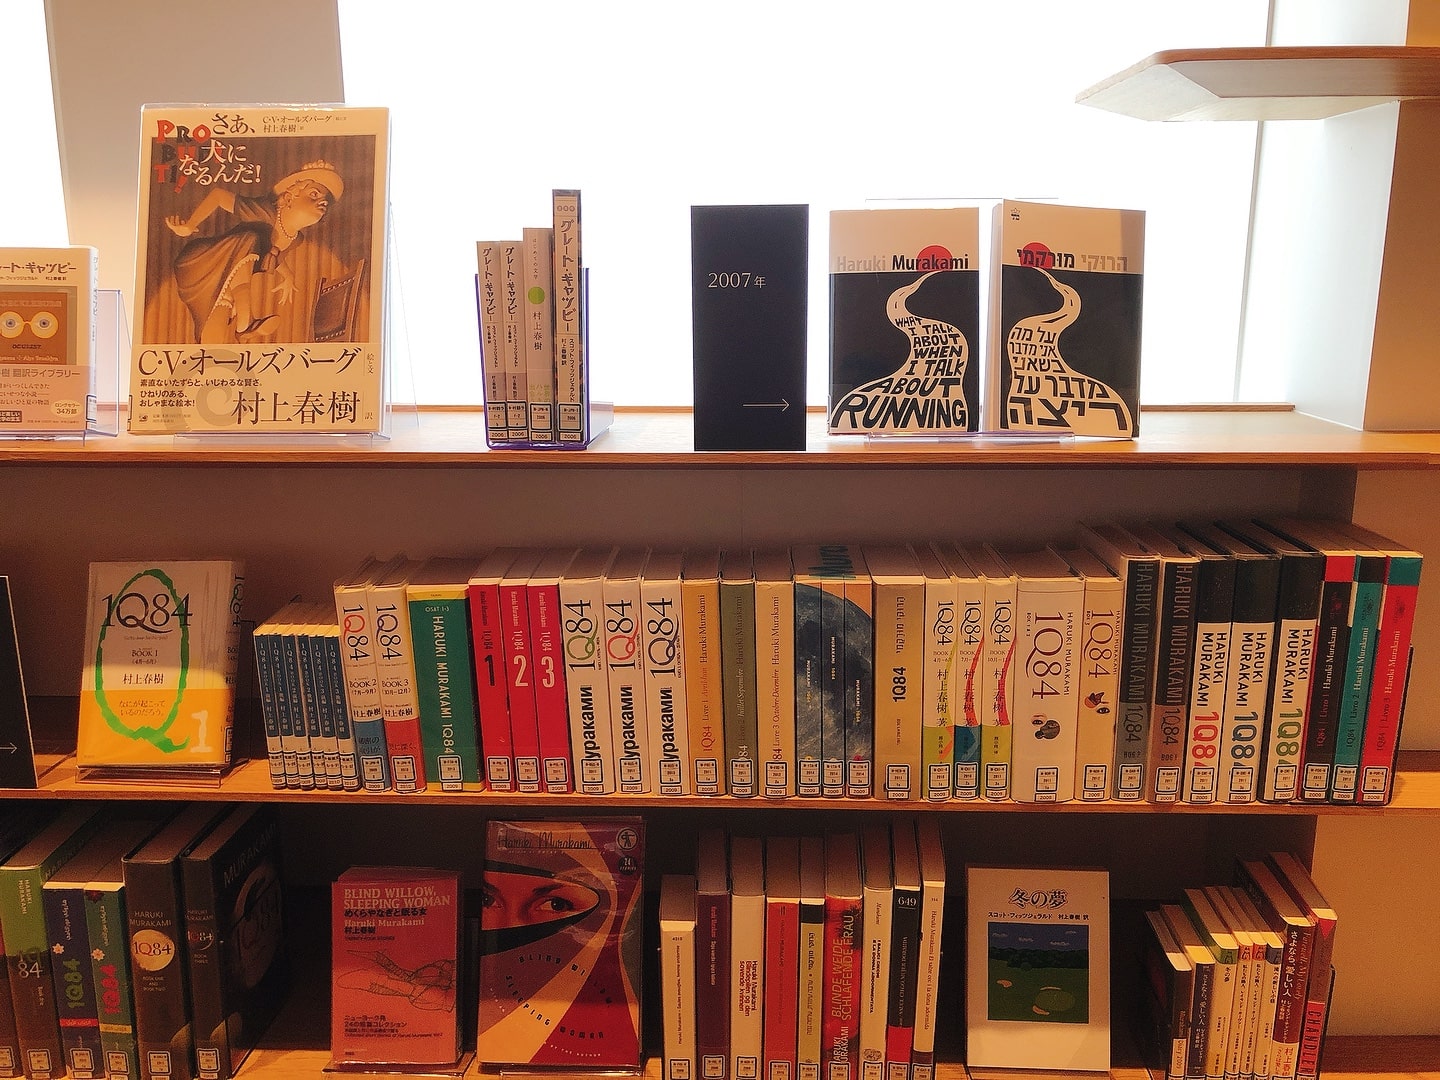 Haruki Murakami books published in the 2000s